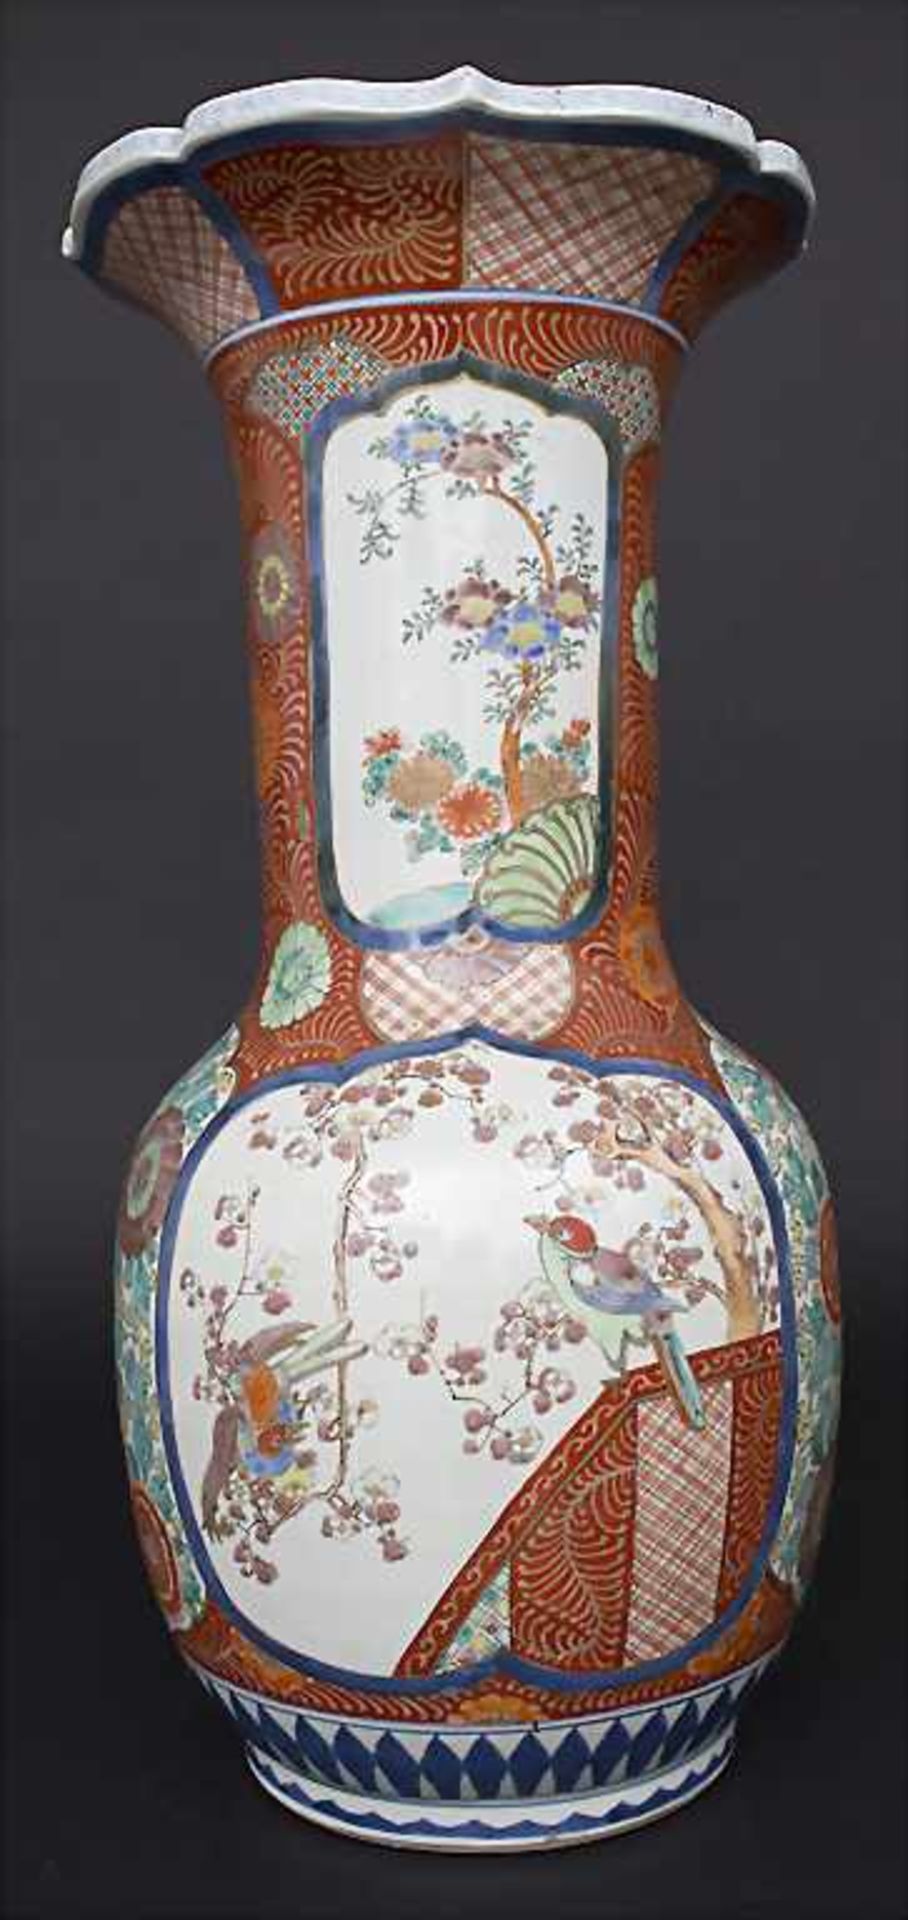 Bodenvase mit Vogel-Blütendekor / A floor vase with birds and flowers, China, um 1900